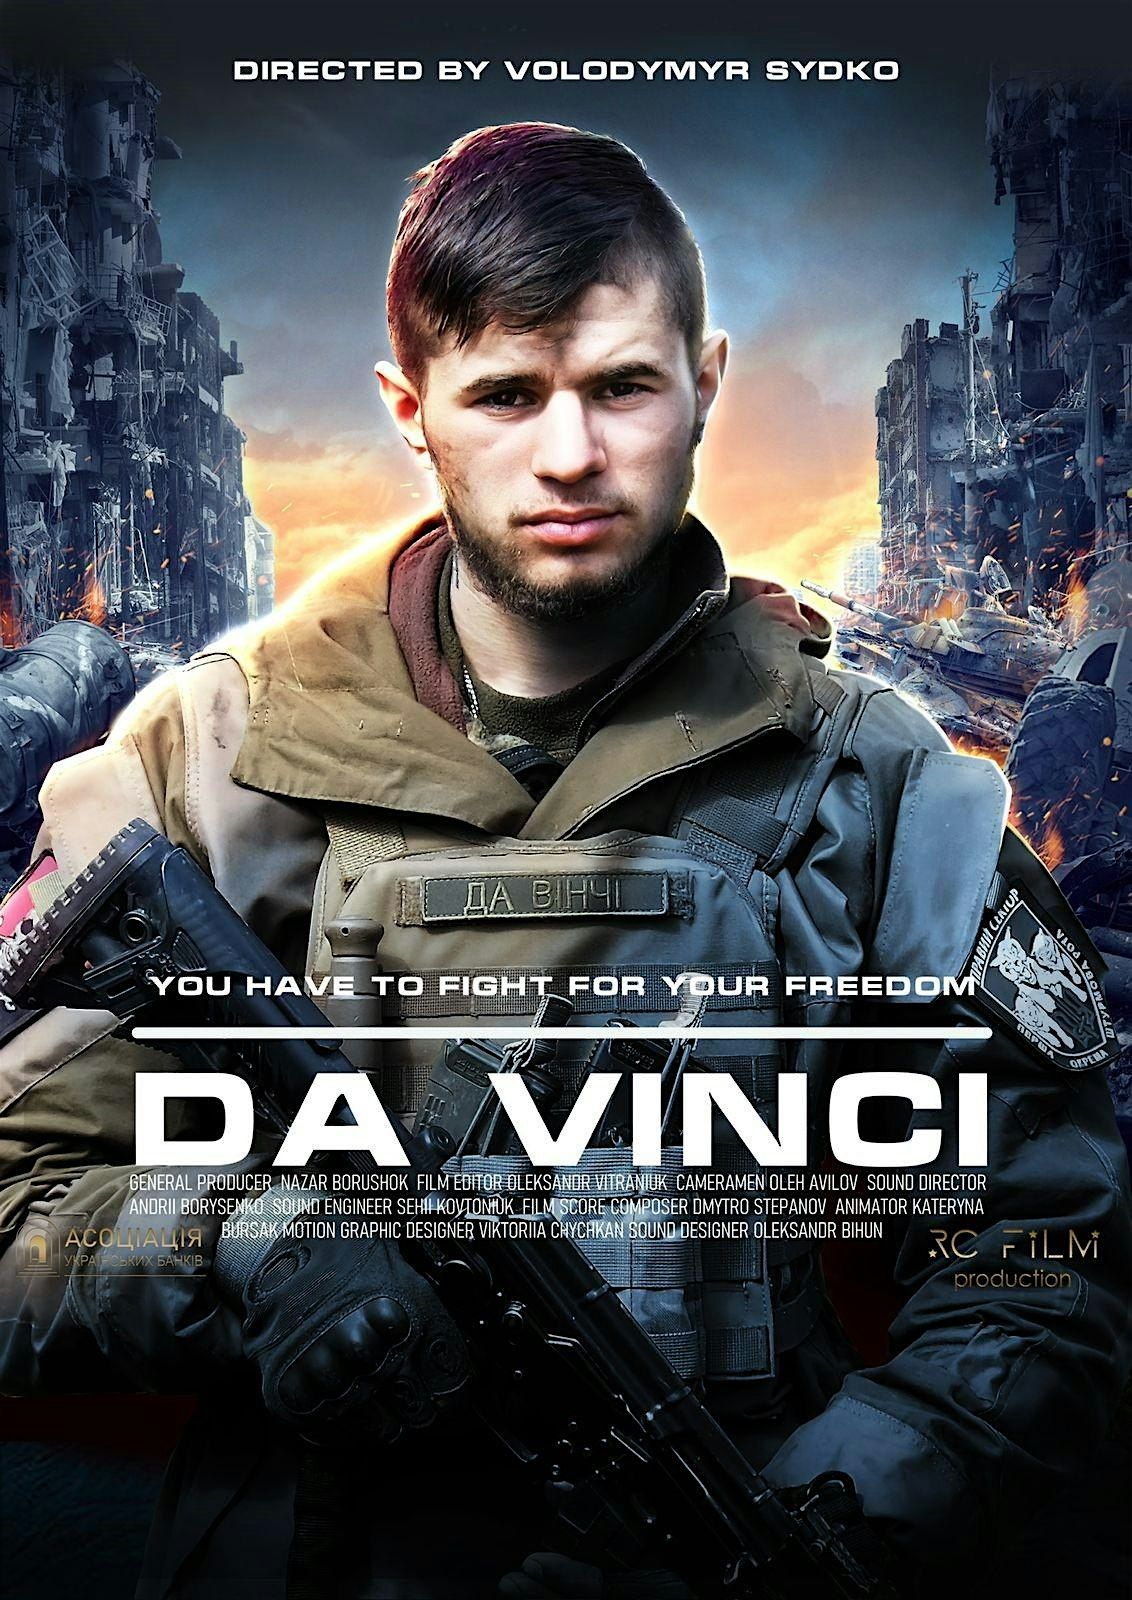 Da Vinci. The Movie about legendary commander and patriot